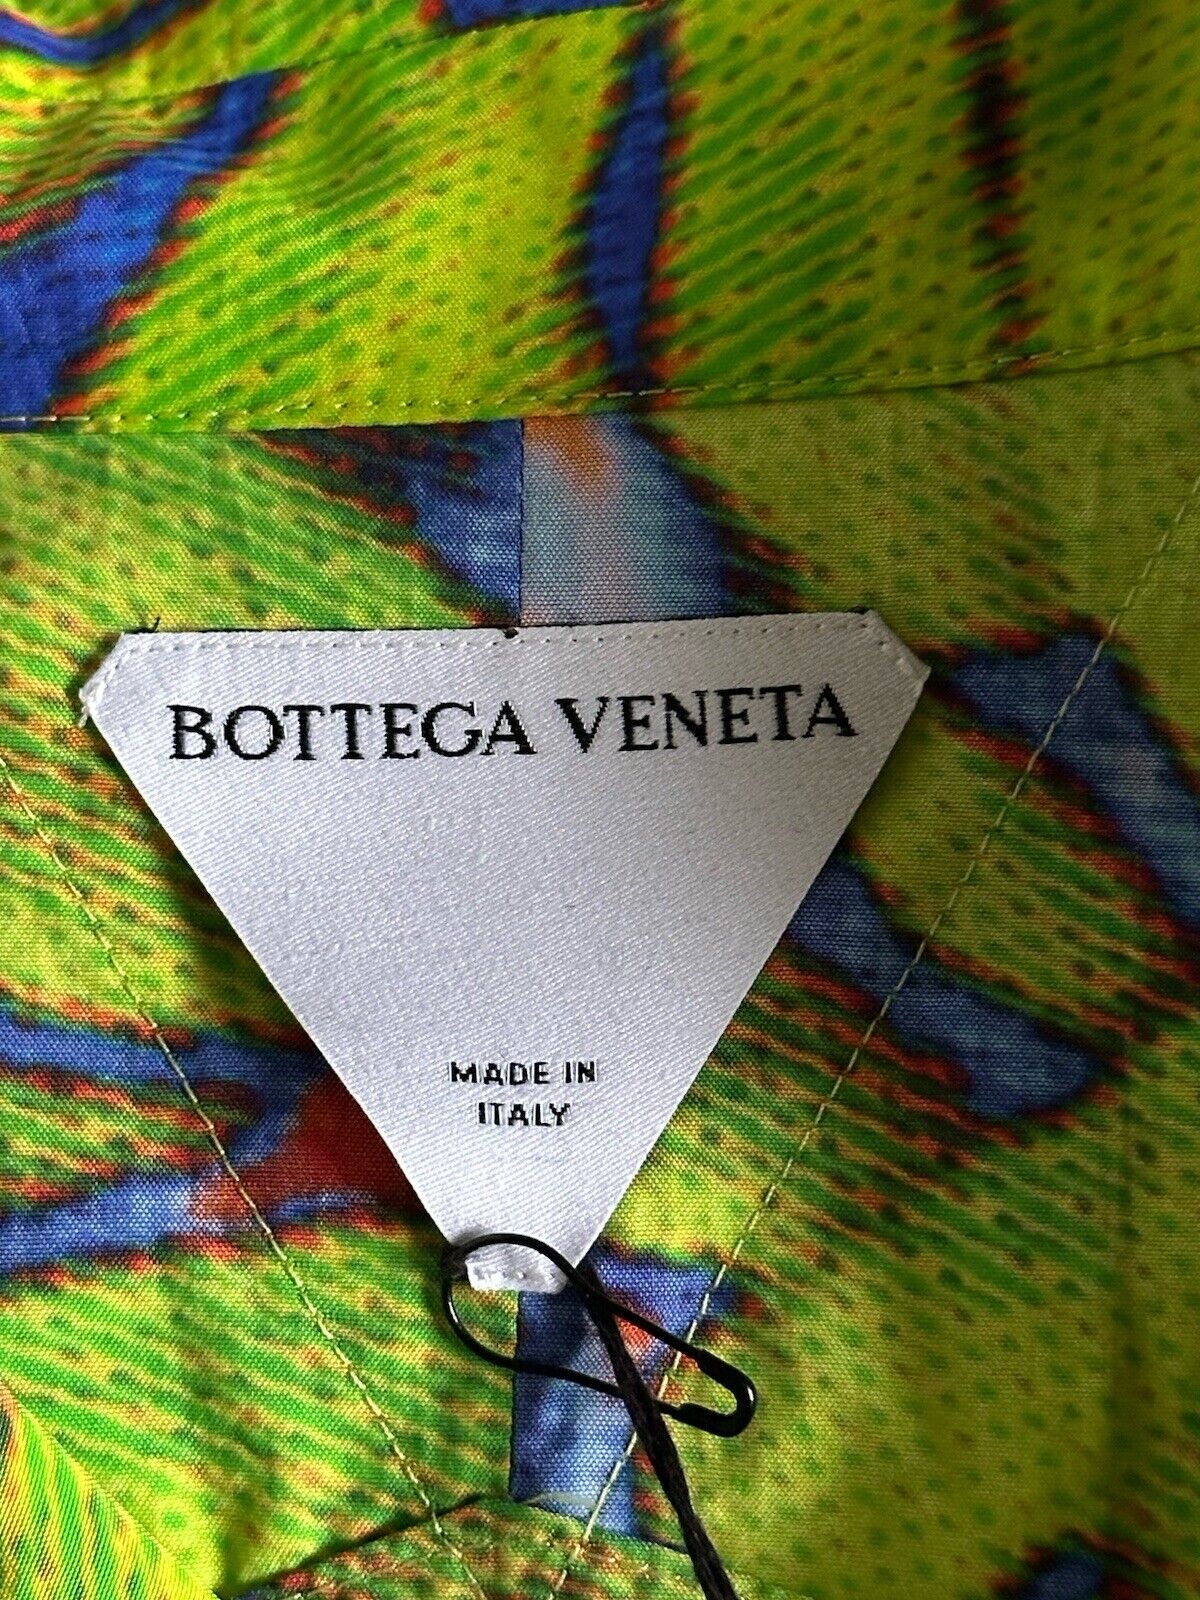 NWT $1050 Bottega Veneta Men’s Technical Hagihara Print Green Shirt 40 US 656849